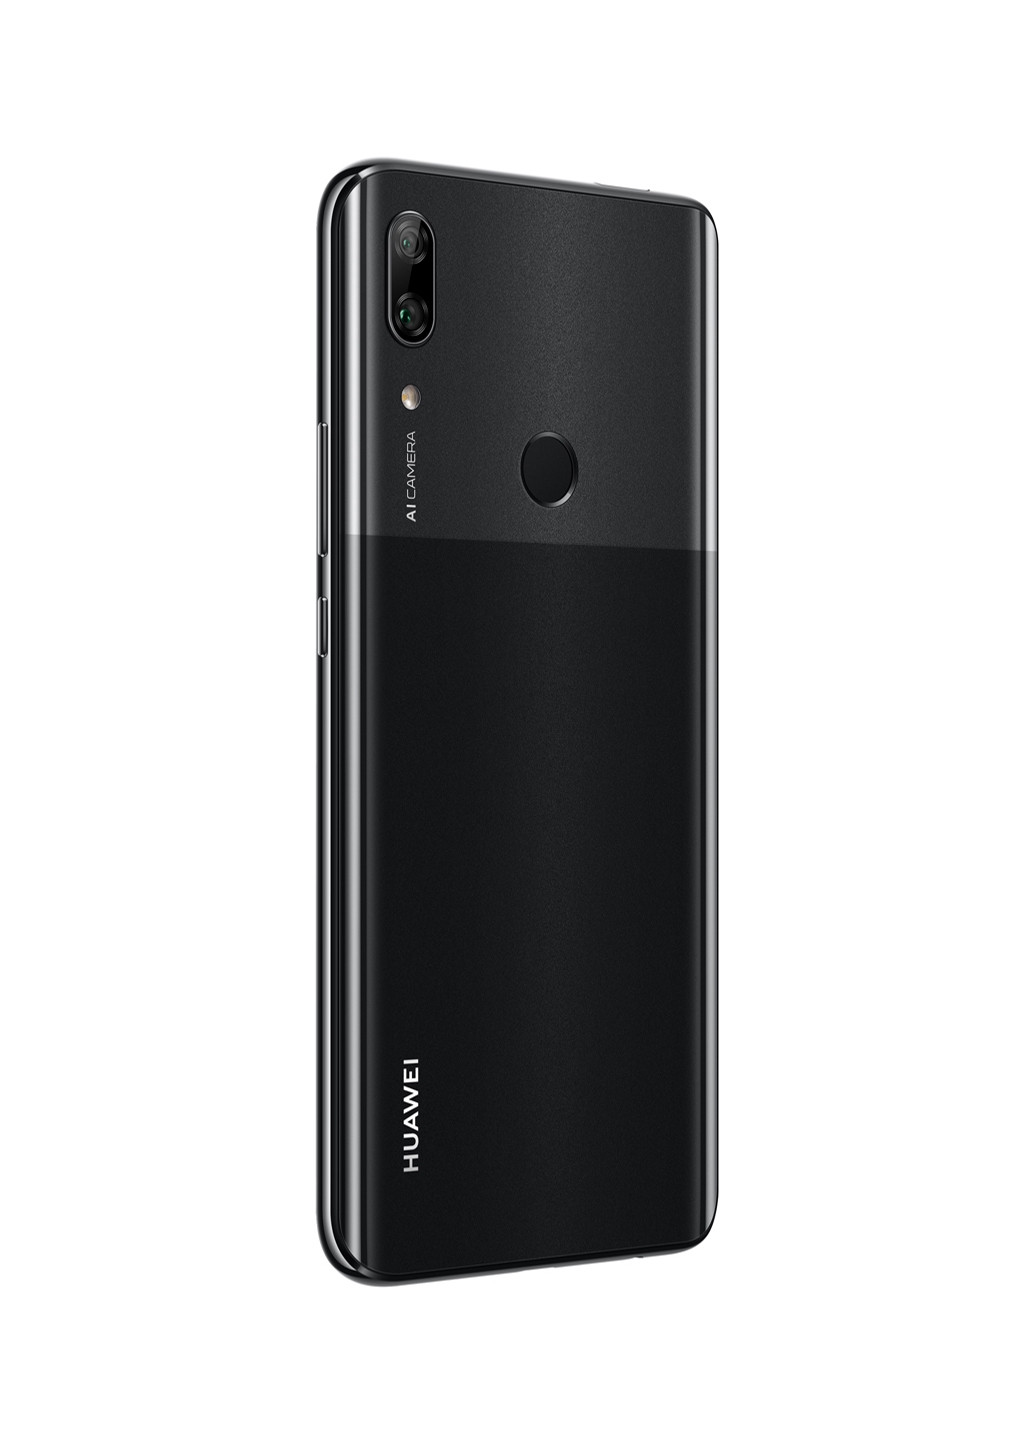 Смартфон P SMART Z 4 / 64GB Black (STK-LX1) Huawei p smart z 4/64gb black (stk-lx1) (163174105)